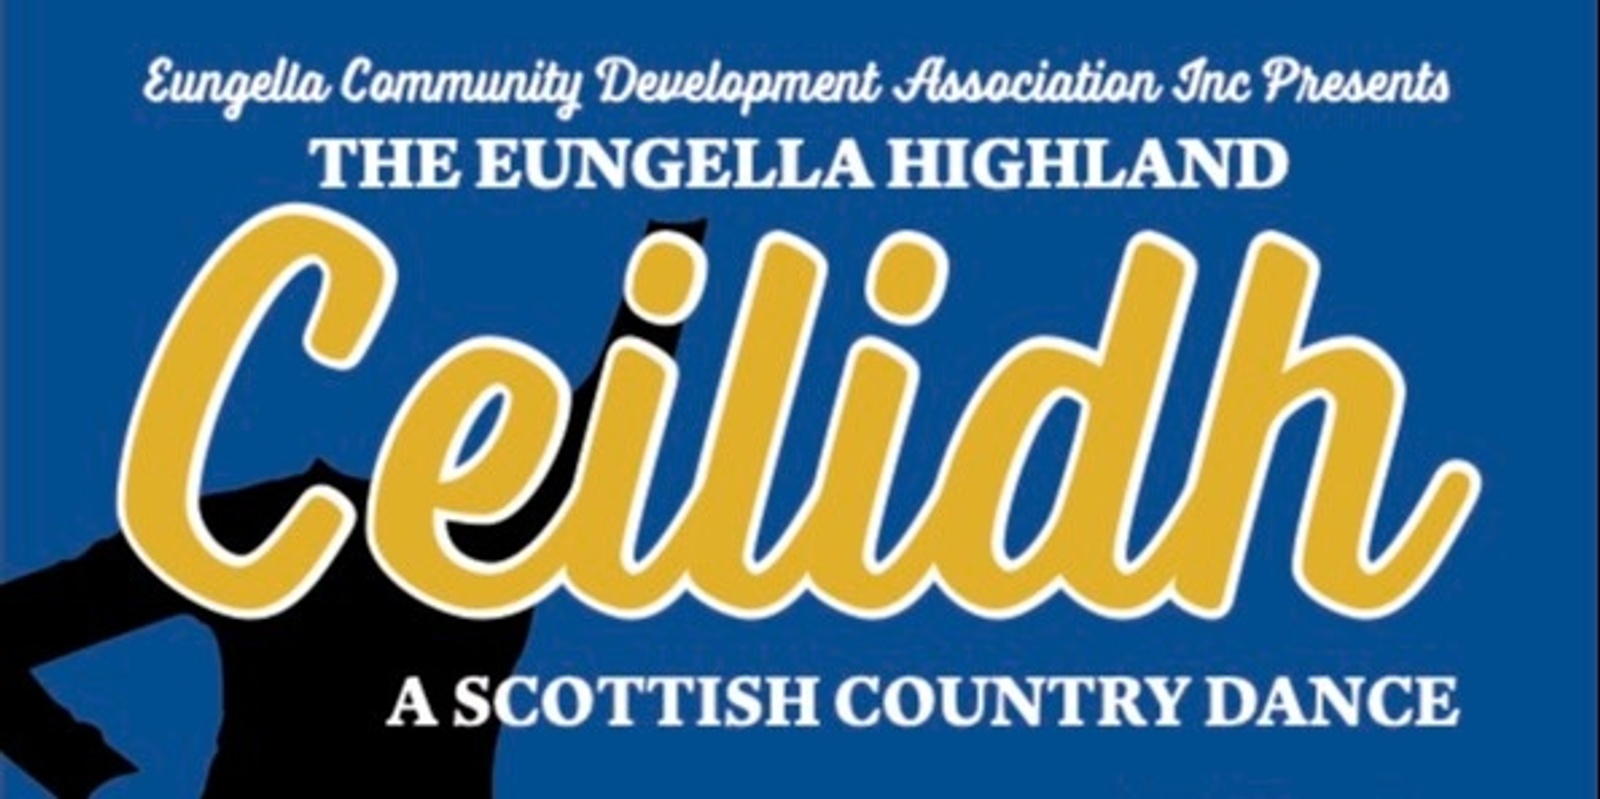 Banner image for The Eungella Highland Ceilidh